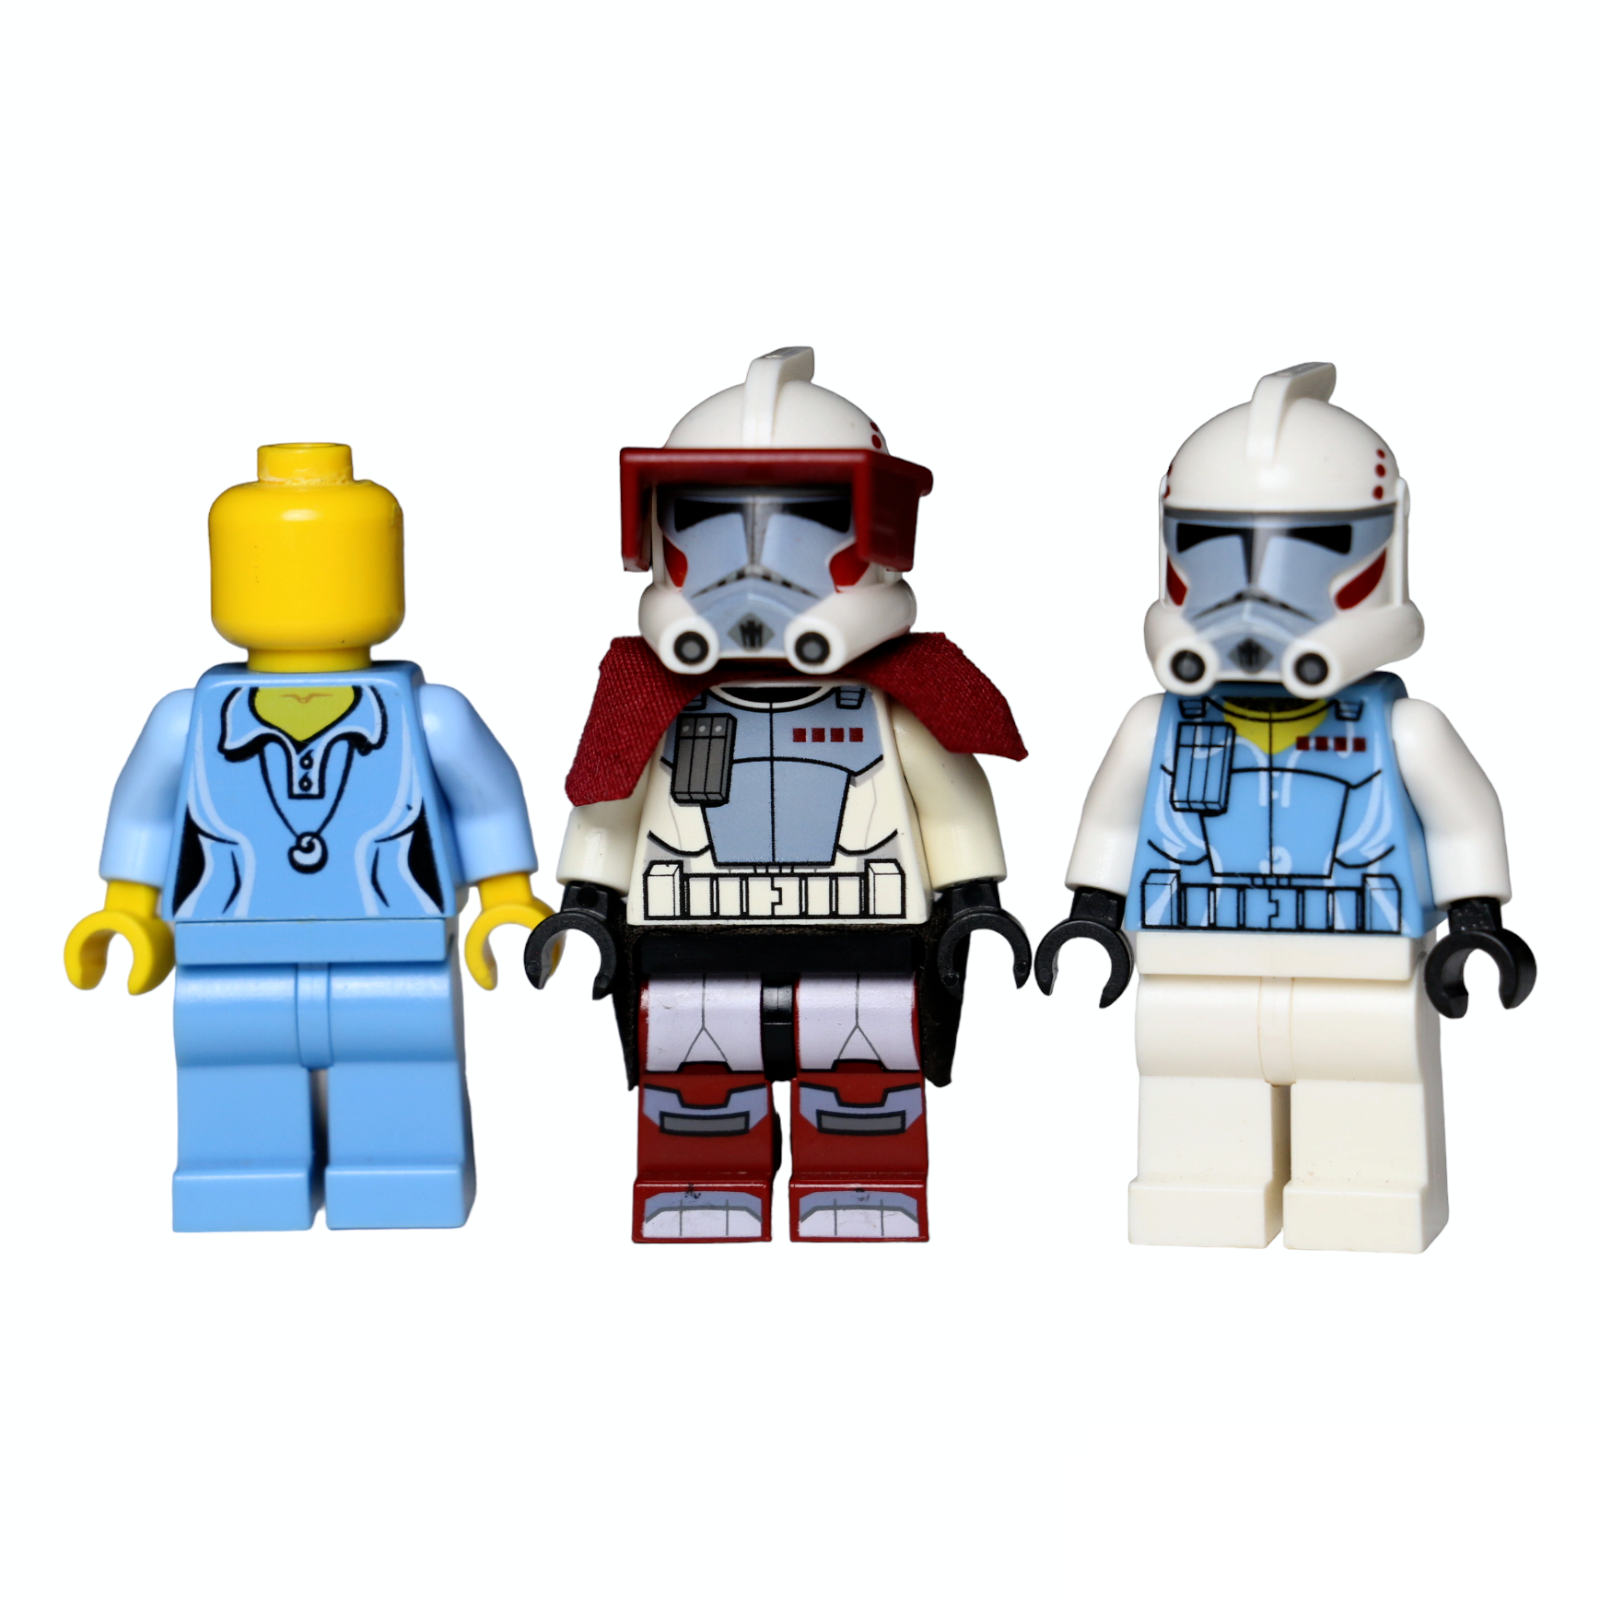 LEGO Clone Arc Trooper minifigure misprint